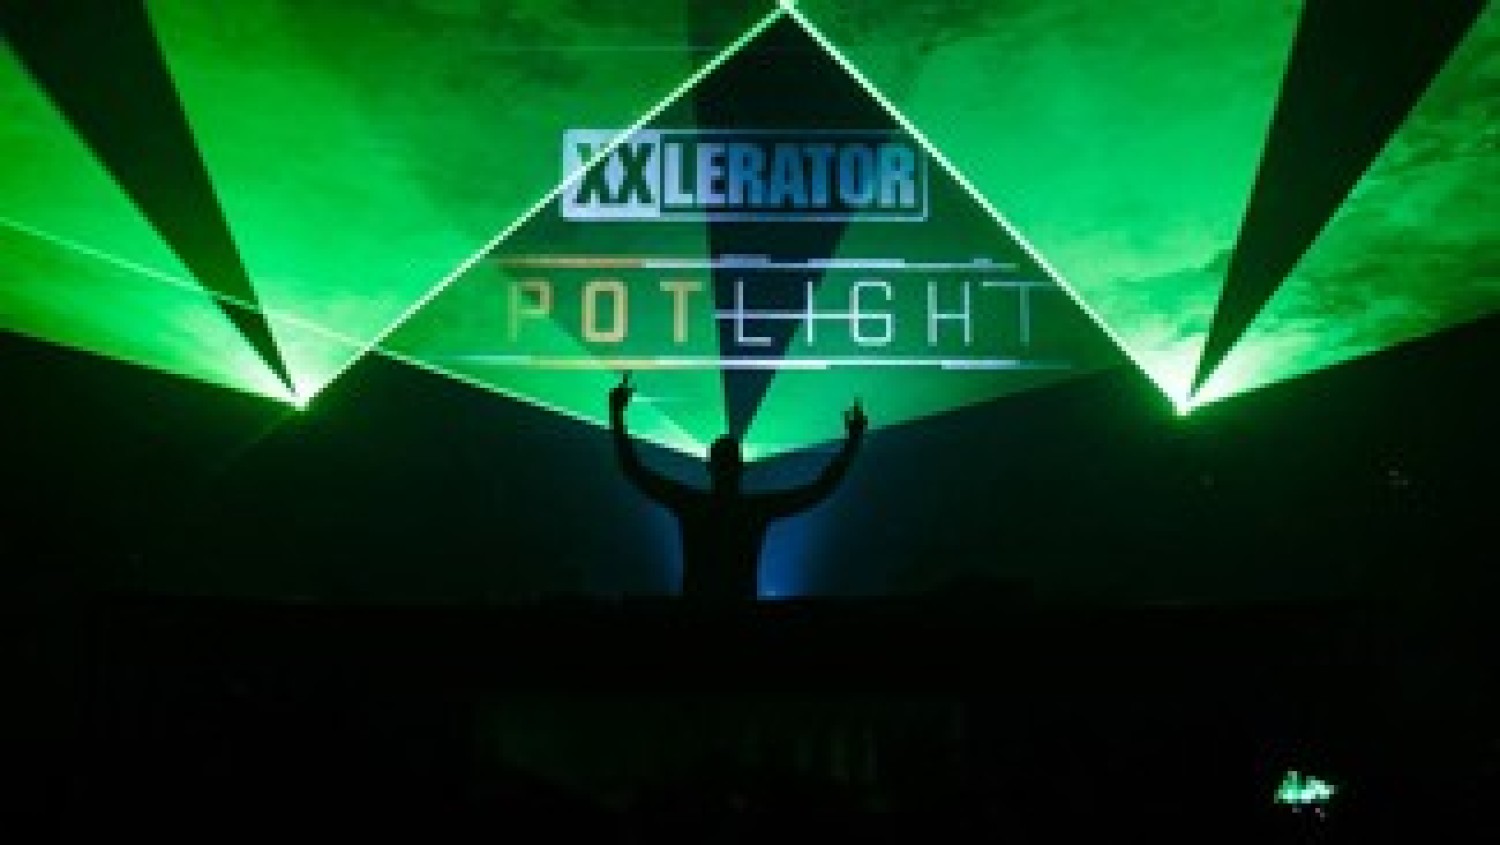 Party report: XXlerator Spotlight, Nijmegen (21-04-2018)